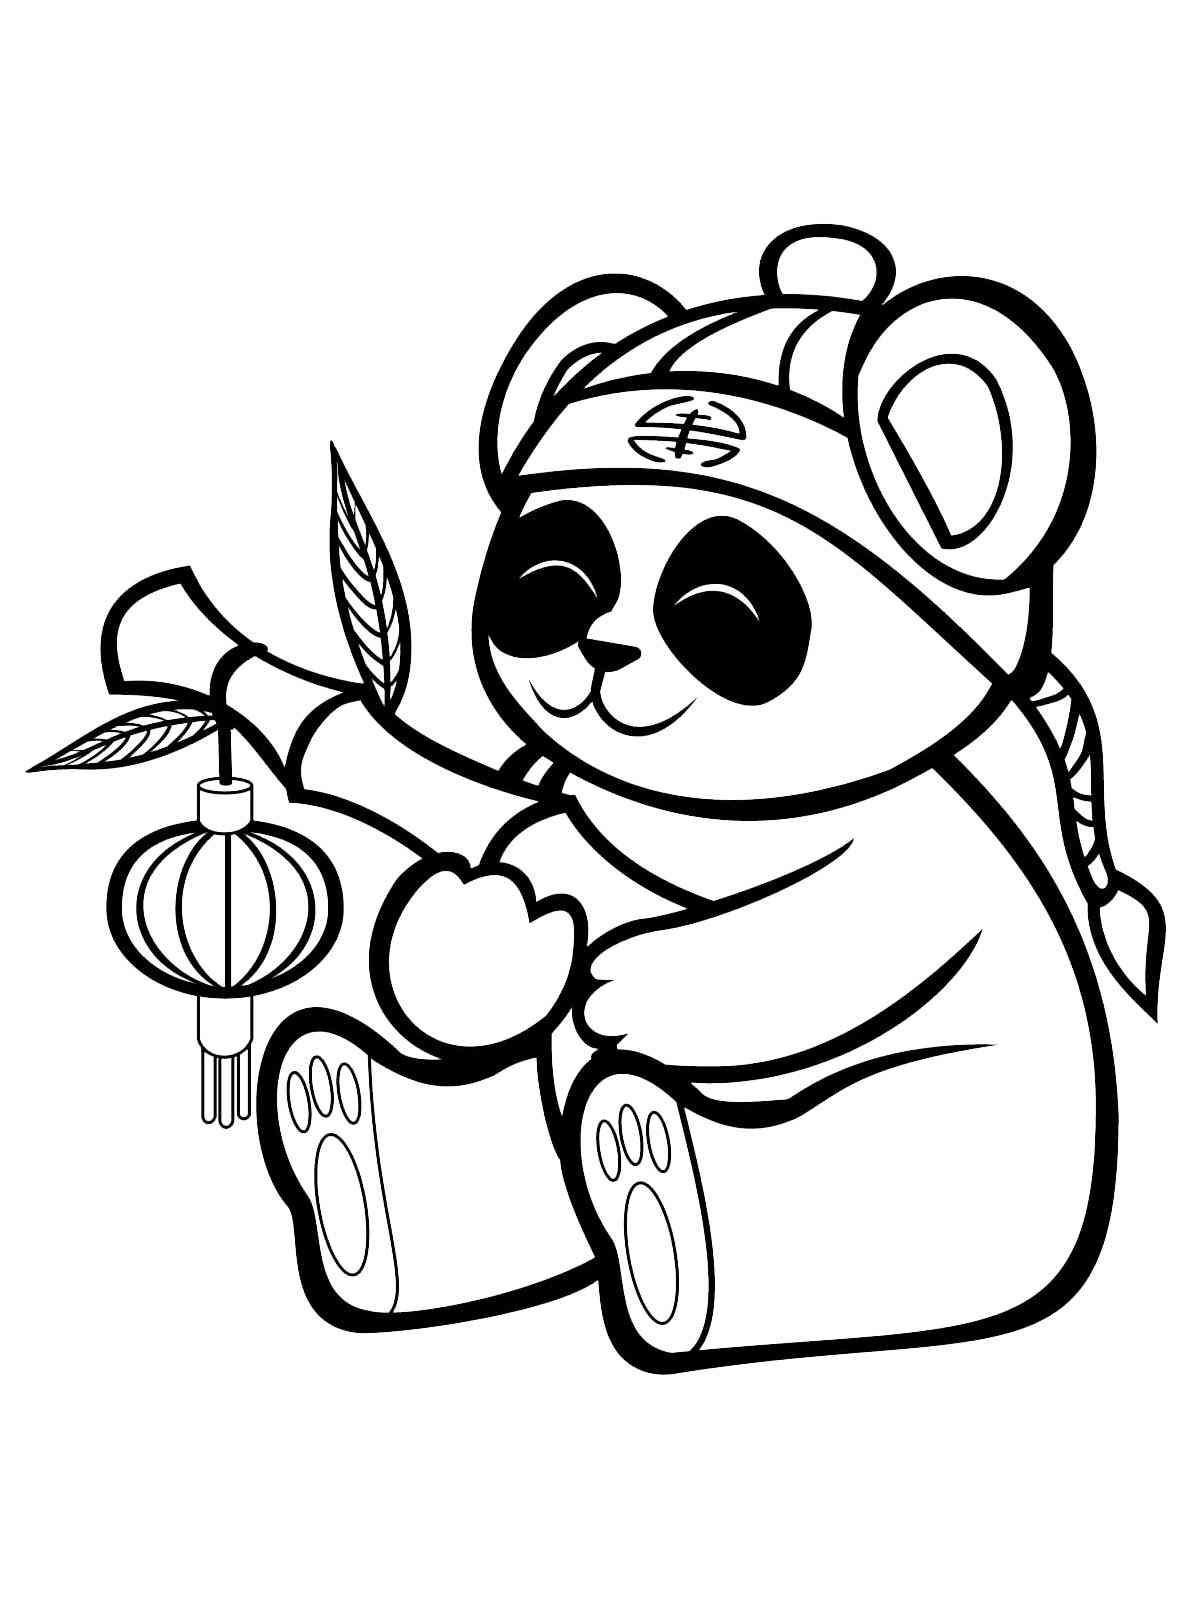 Cute Panda coloring page